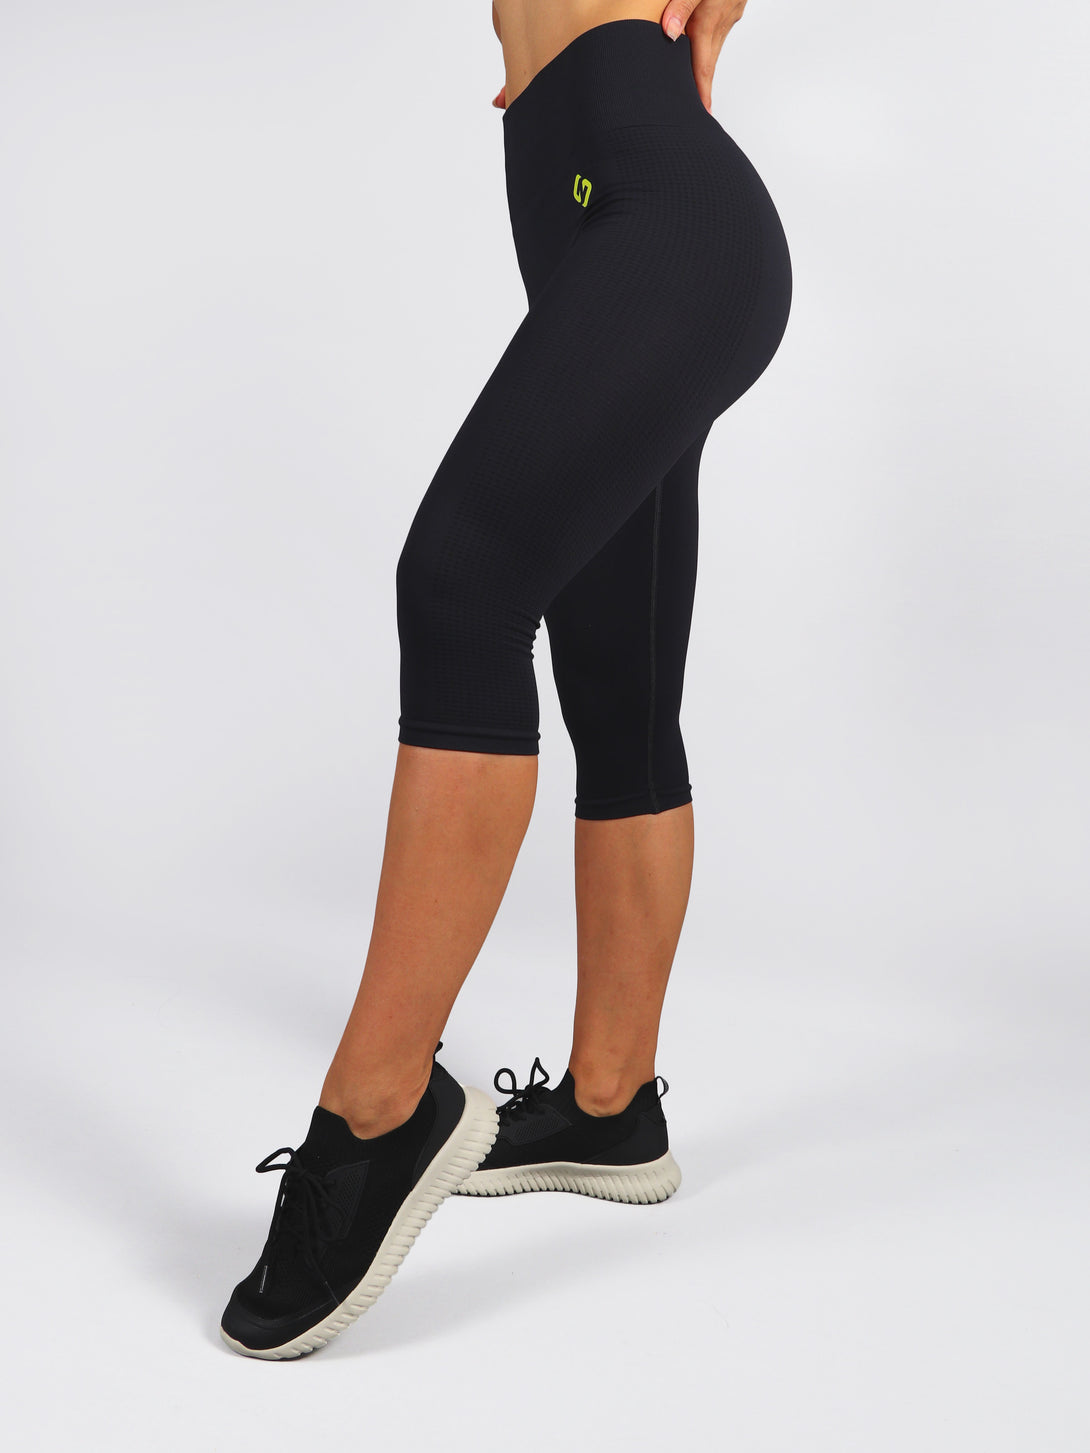 A Woman Wearing Black Color Seamless Capri Legging